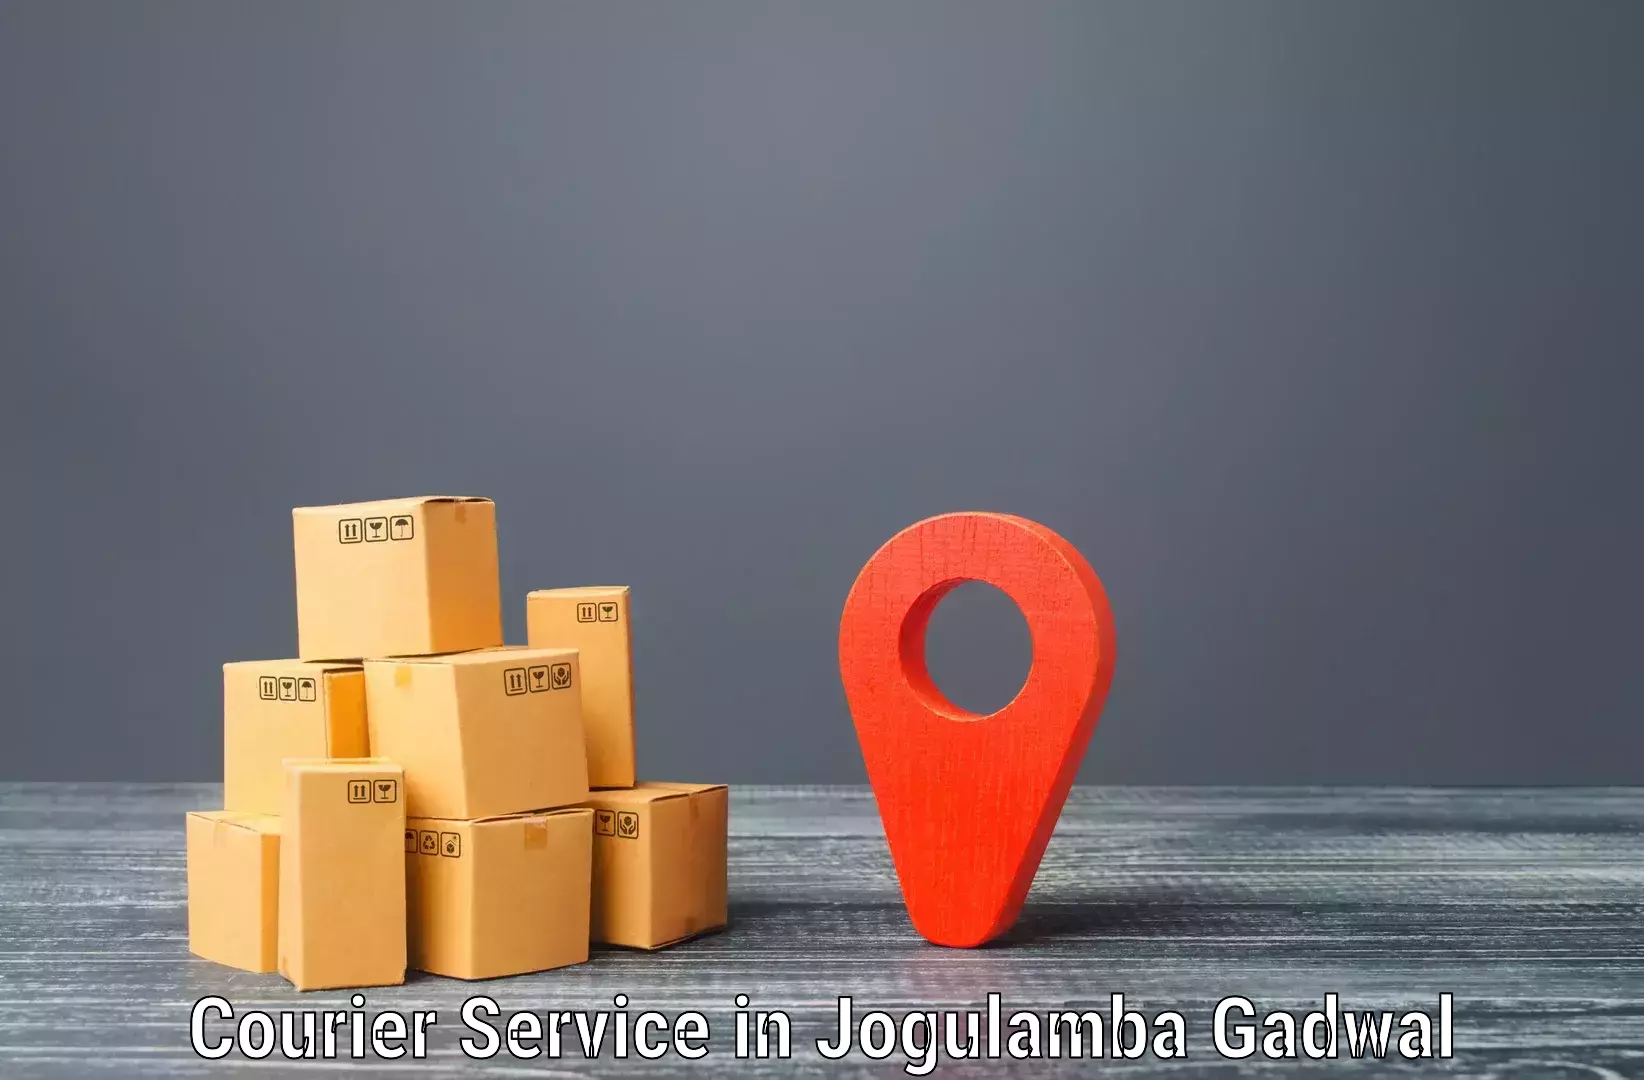 Shipping and handling in Jogulamba Gadwal